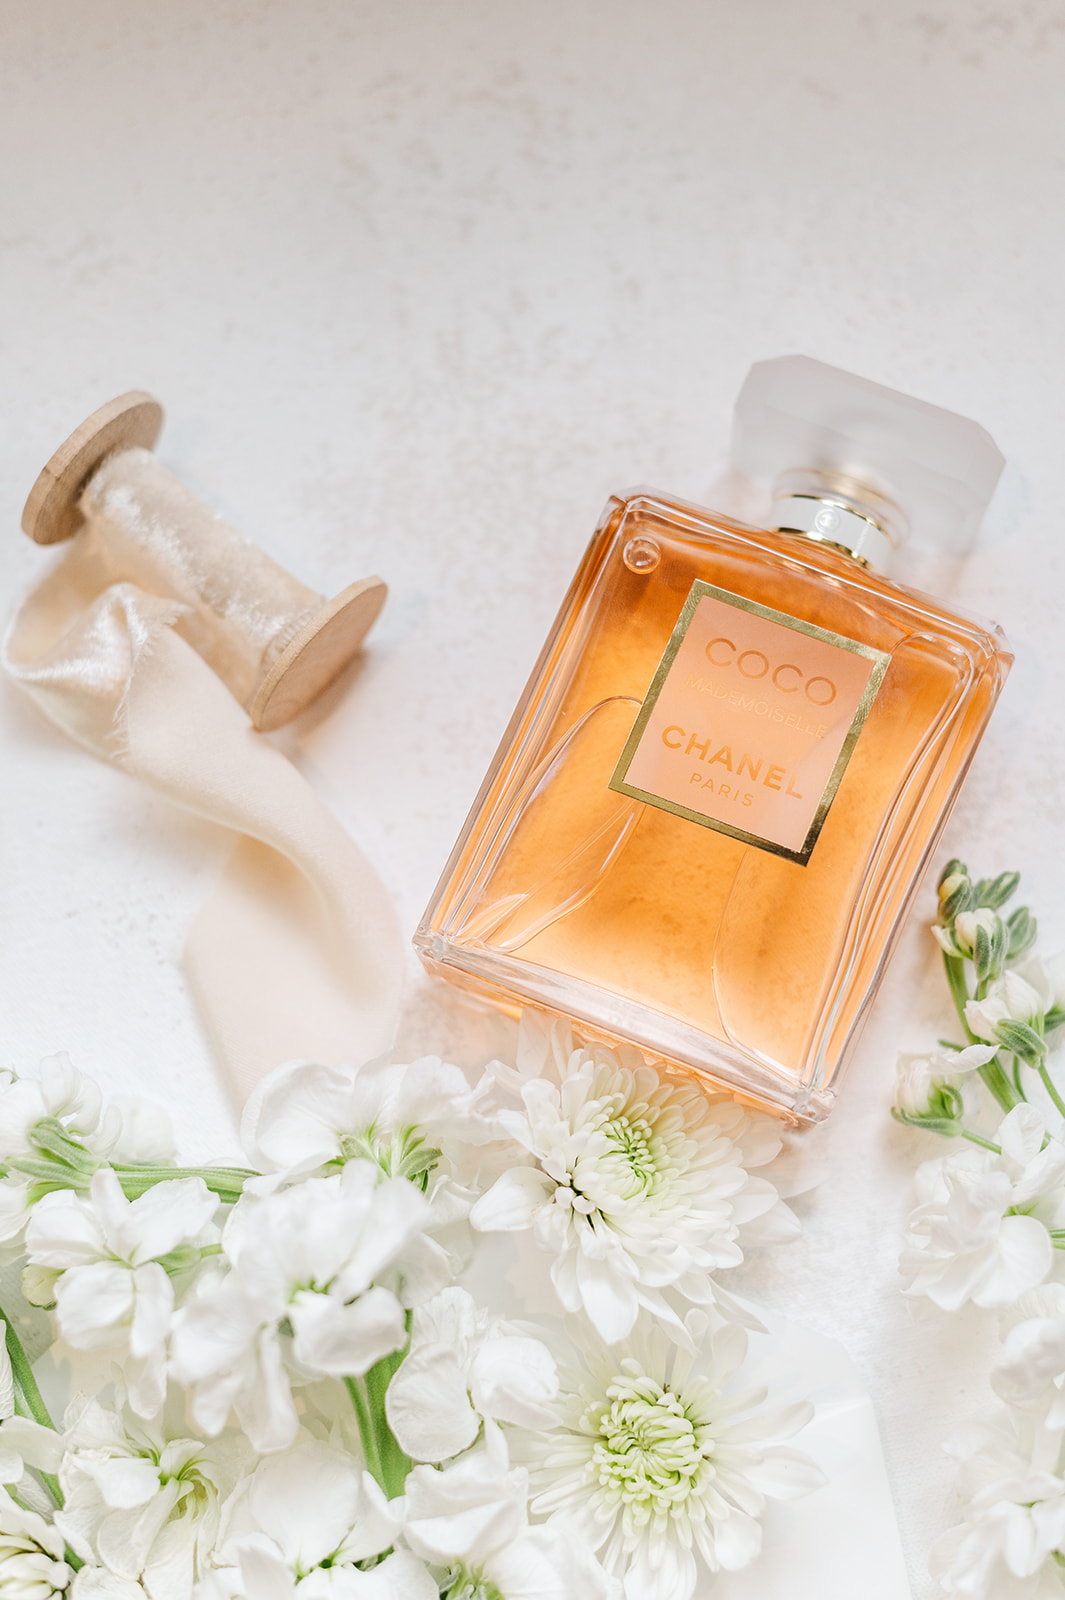 Coco Chanel wedding perfume 